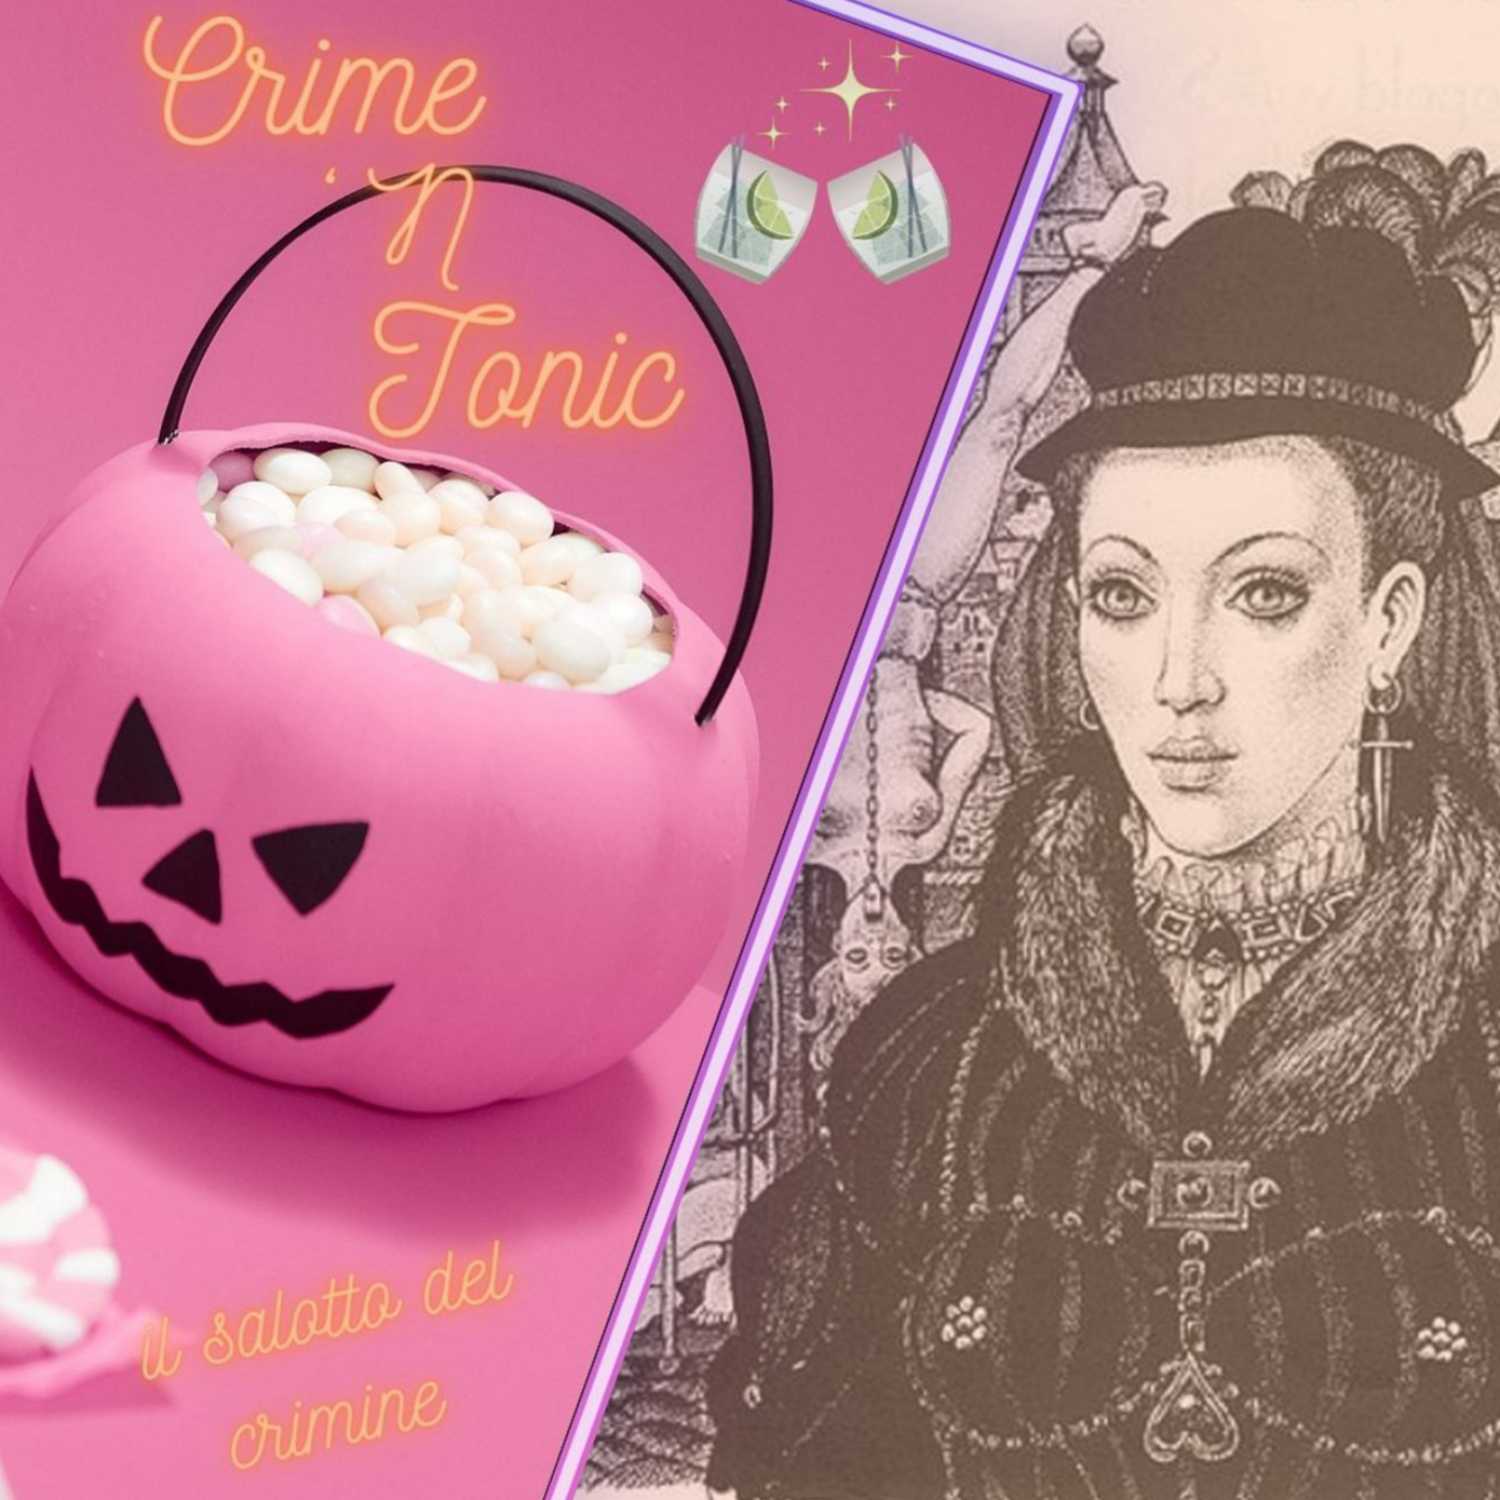 Episode 2: Speciale Halloween Prima Parte: La contessa sanguinaria